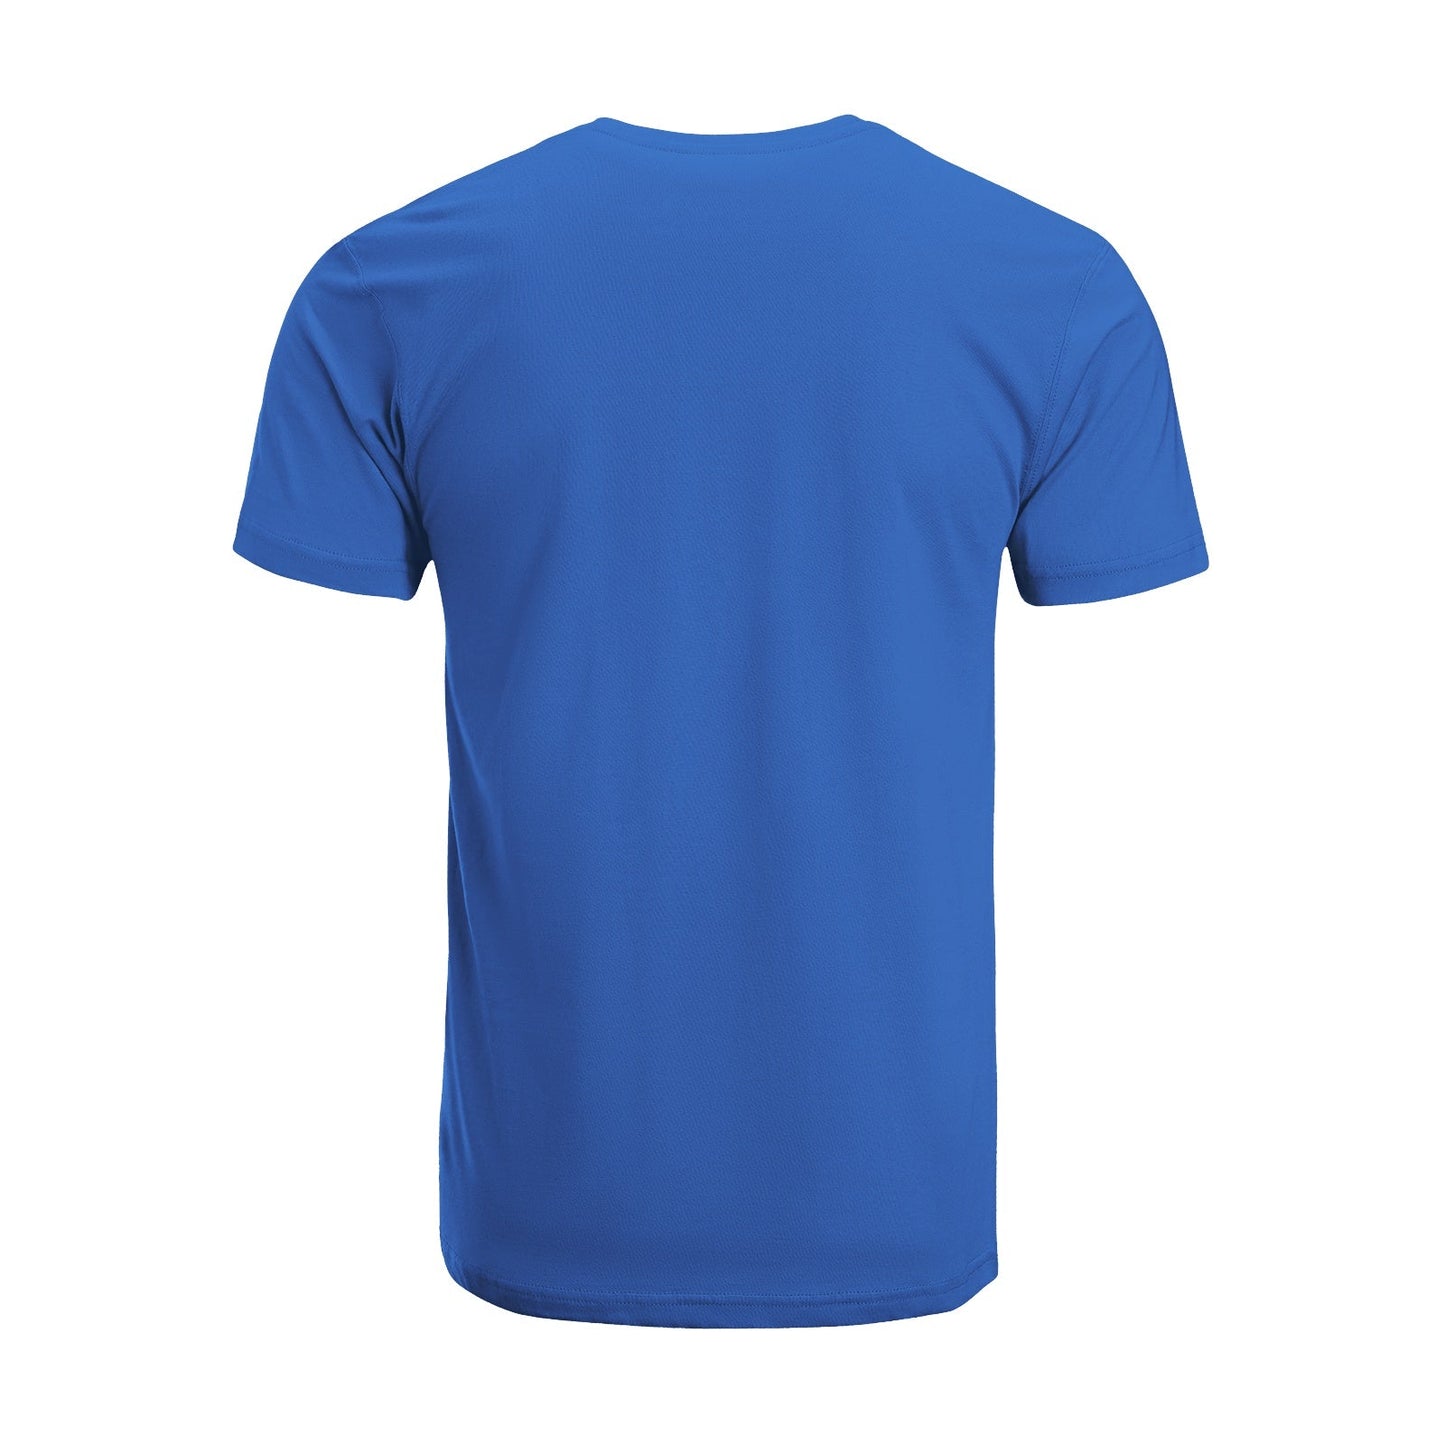 Unisex Short Sleeve Crew Neck Cotton Jersey T-Shirt CAT 30 - Tara-Outfits.com